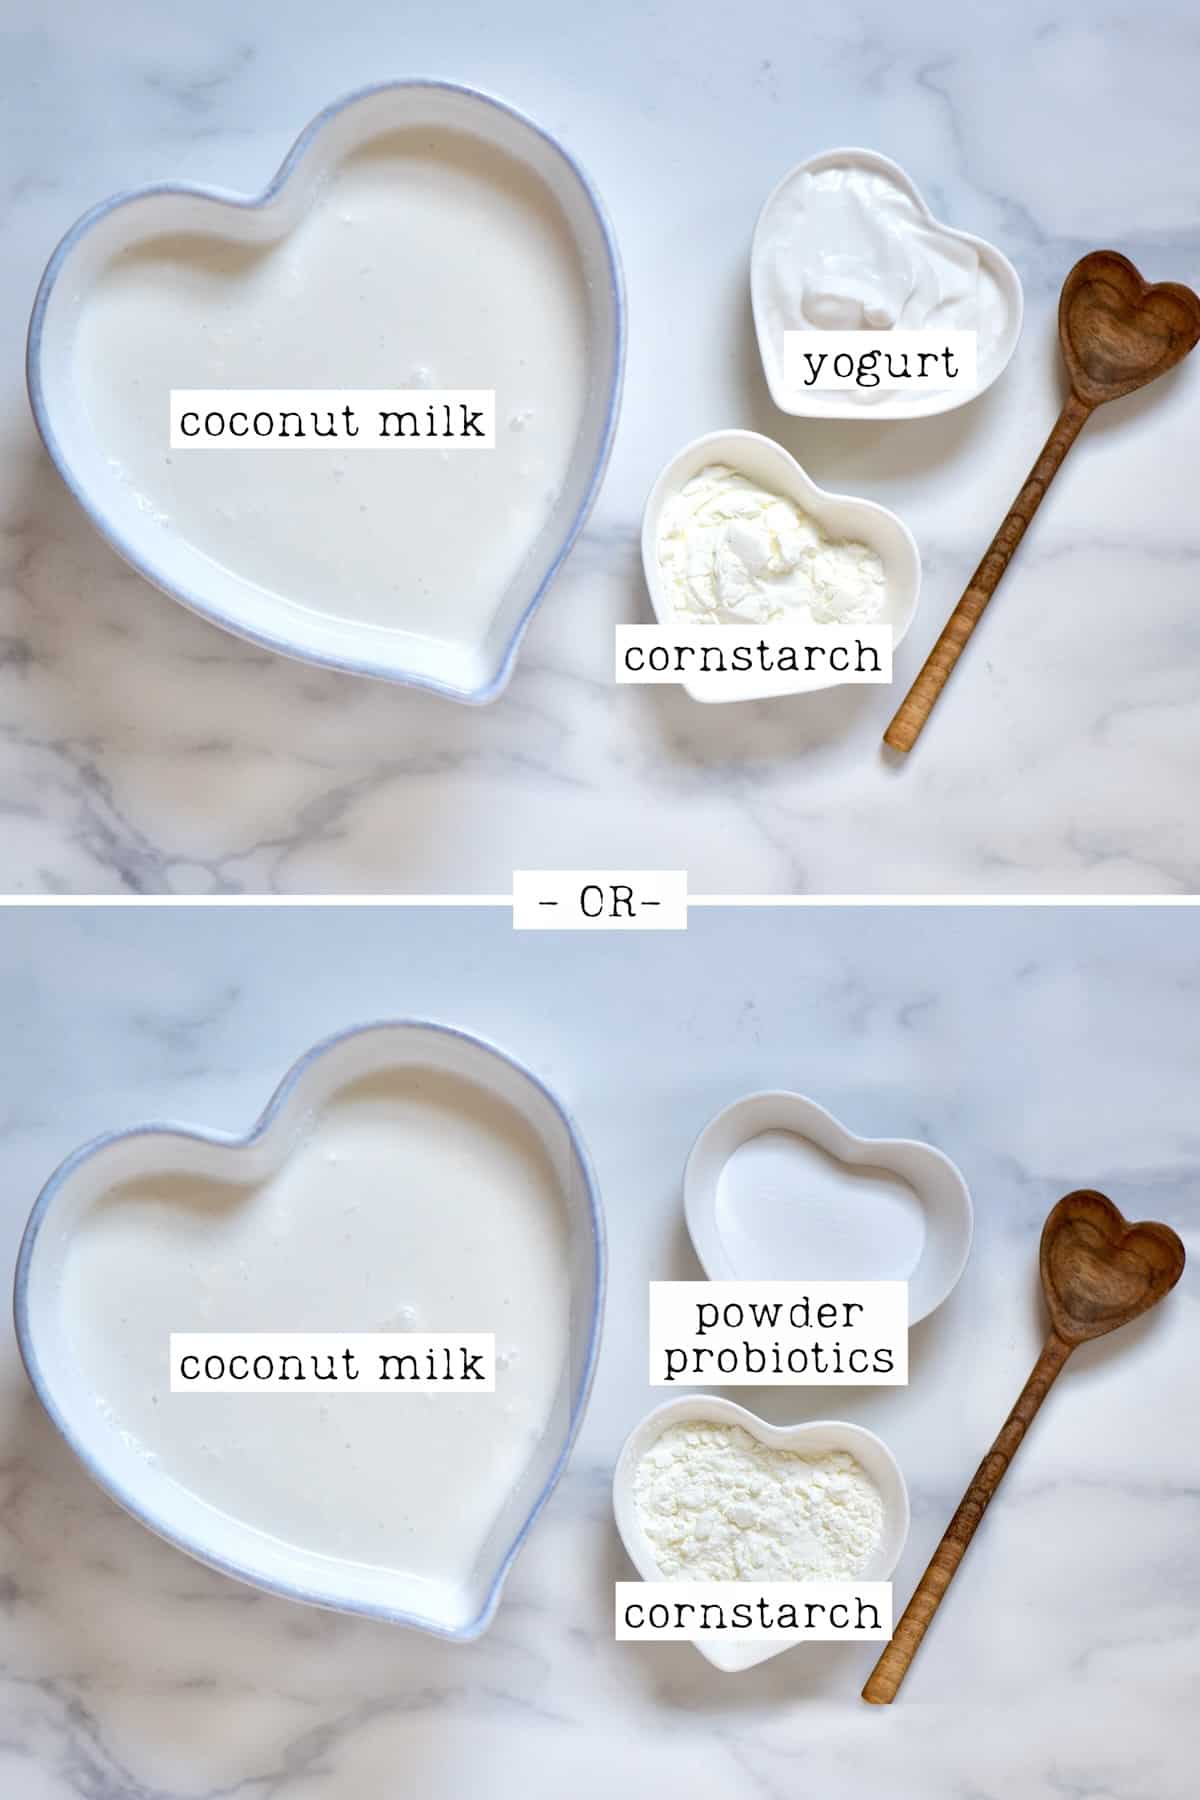 Ingredients to make coconut yogurt